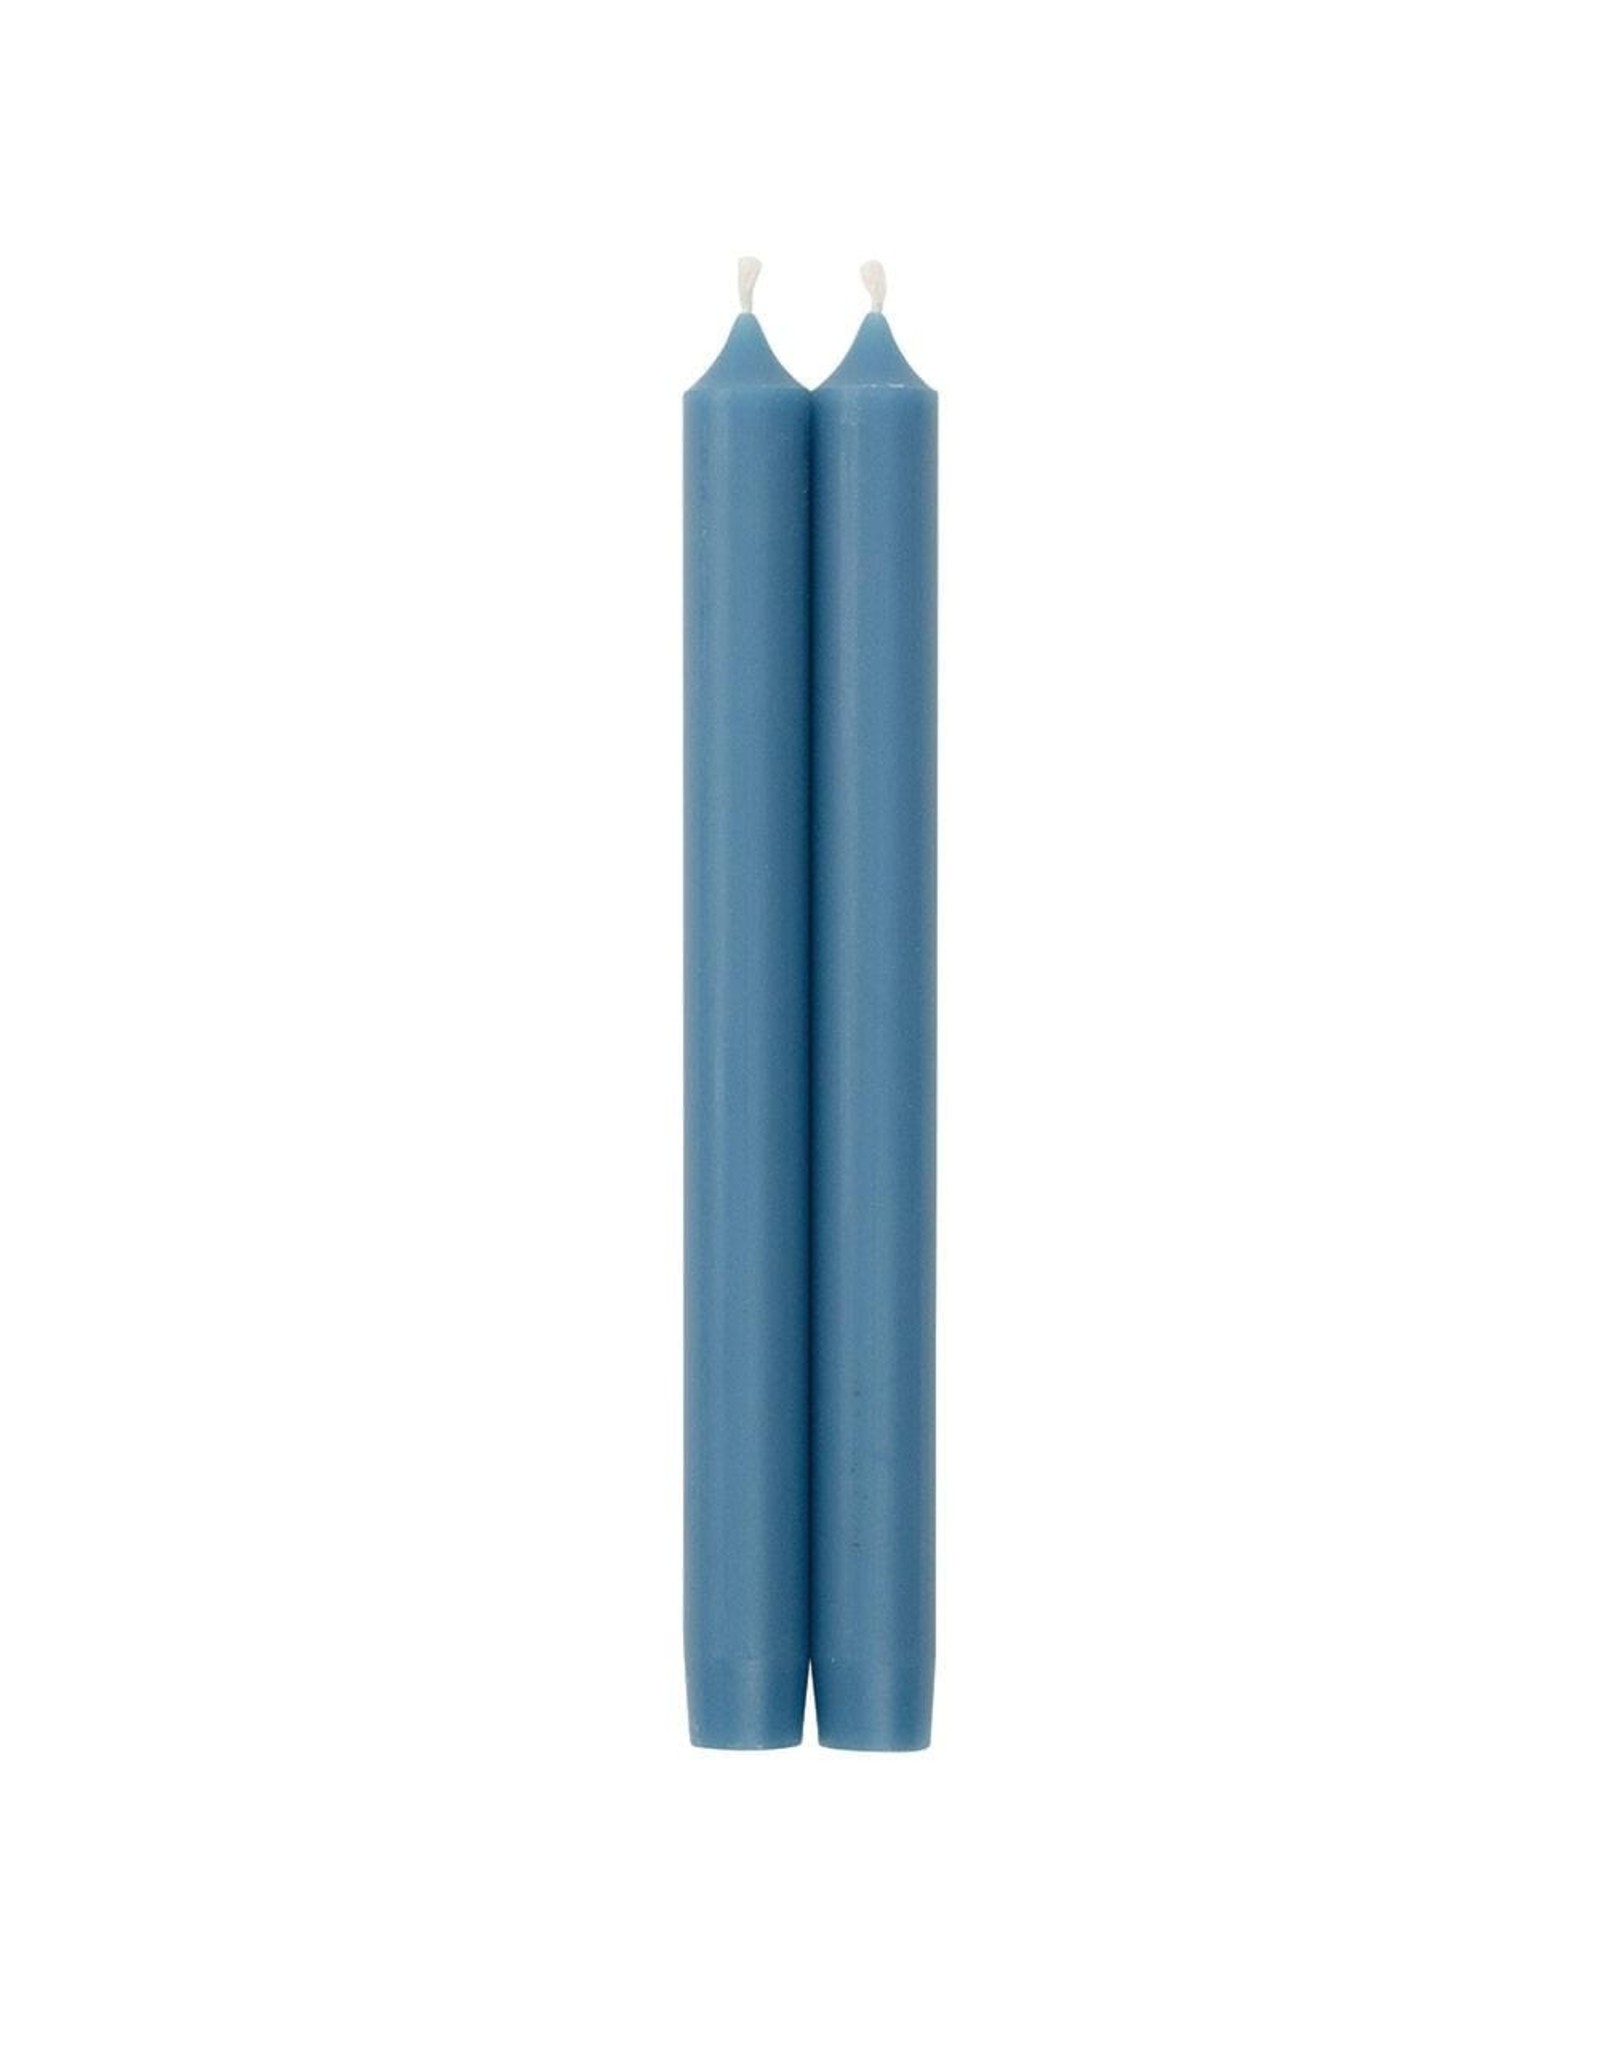 Caspari Crown Candles Tapers 12 inch 2pk In Parisian Blue